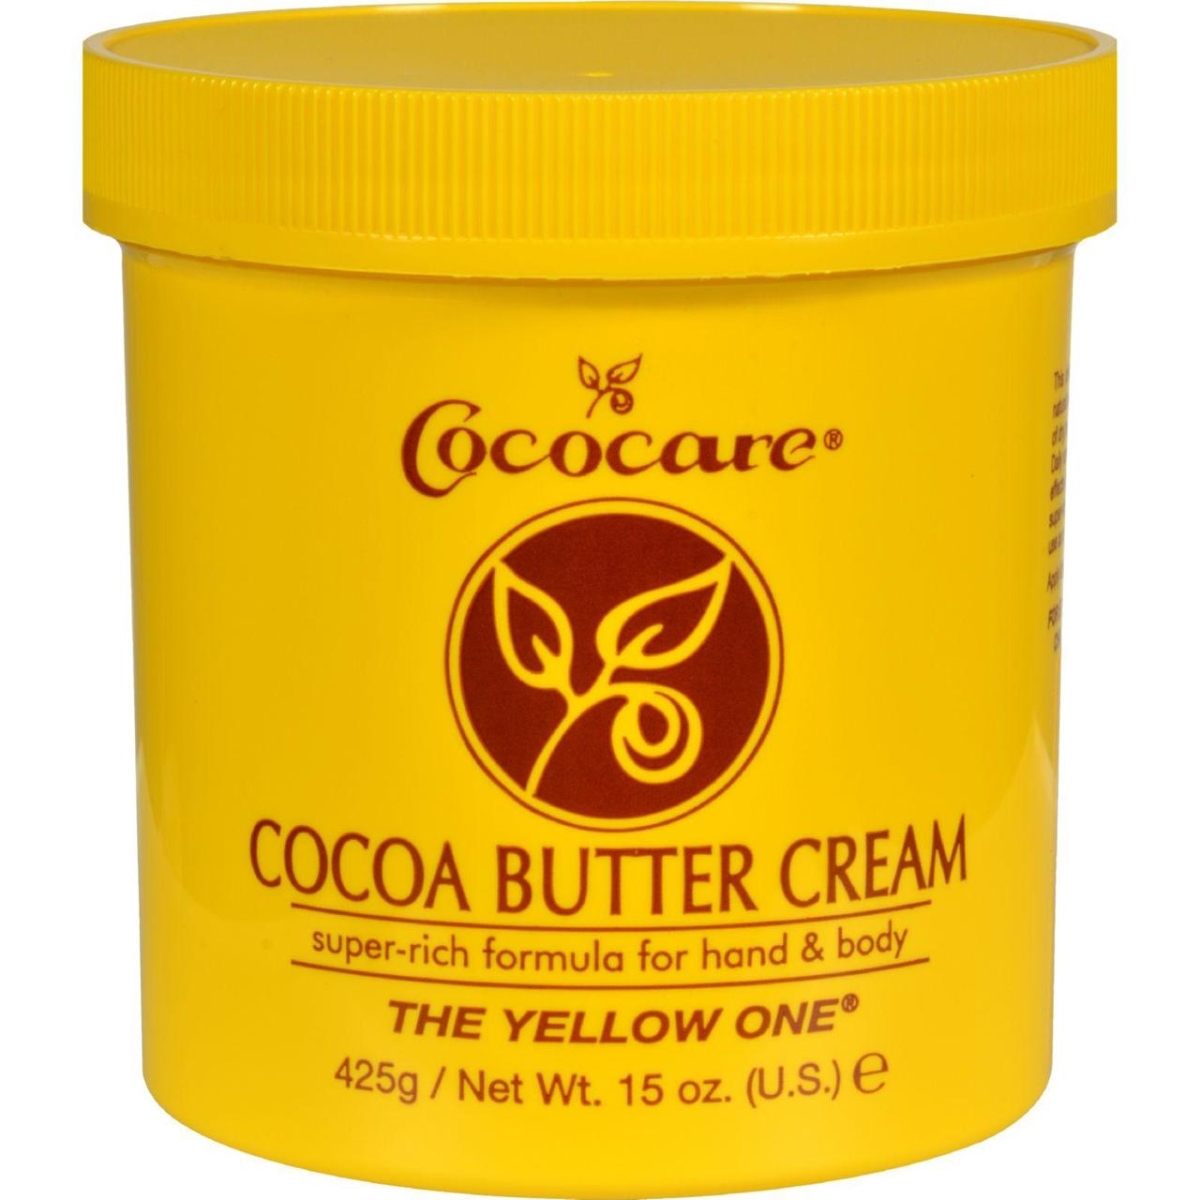 Hg0703231 15 Oz Cocoa Butter Cream